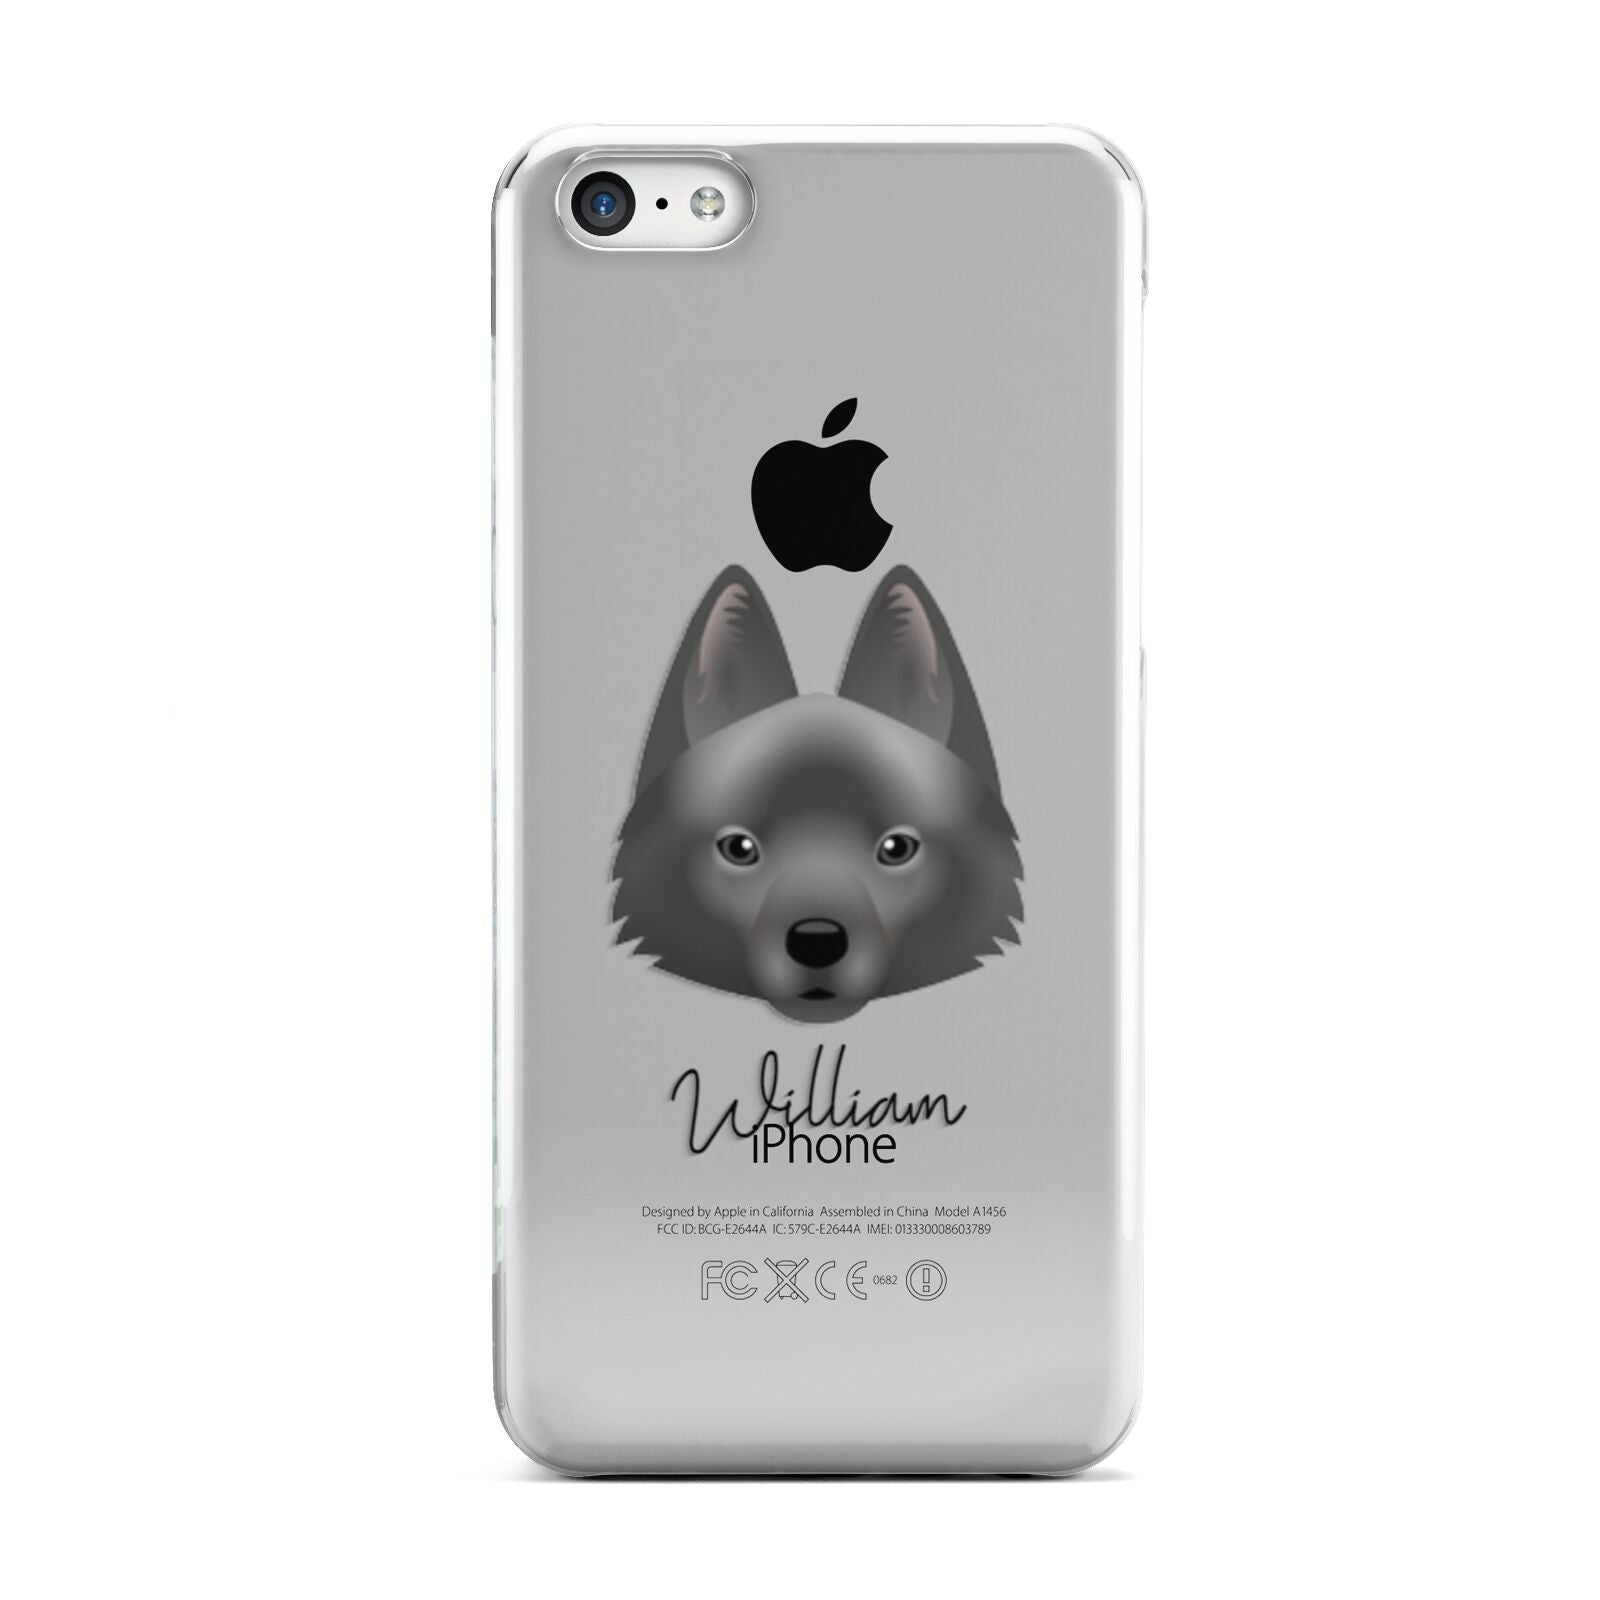 Schipperke Personalised Apple iPhone 5c Case